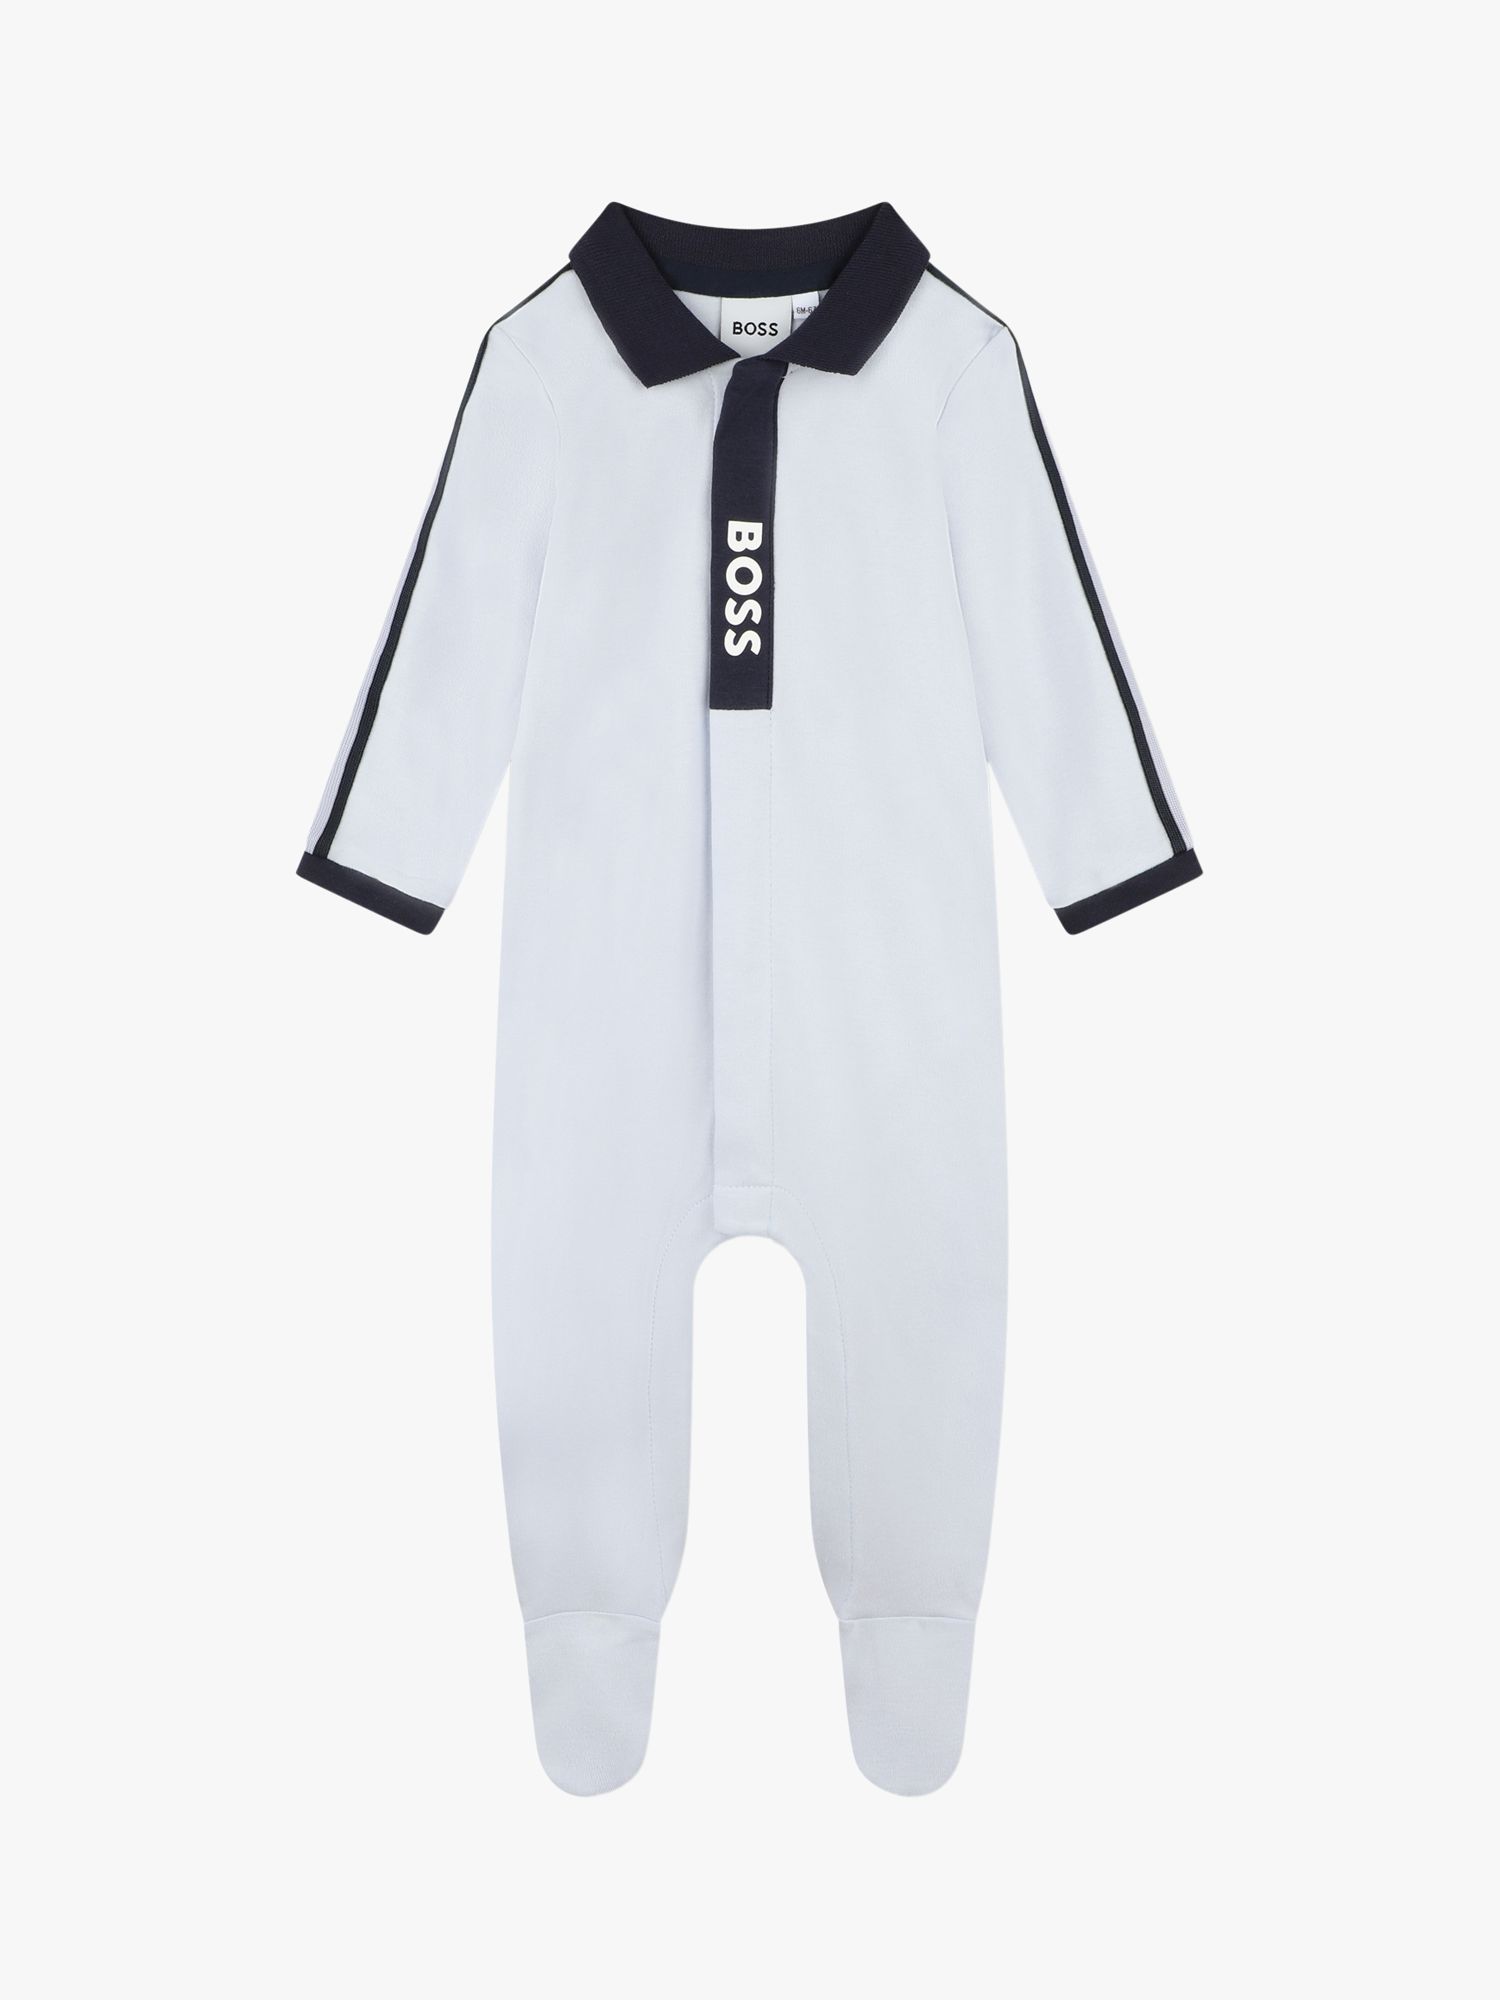 BOSS Baby Interlock Sleepsuit, White, 1 months